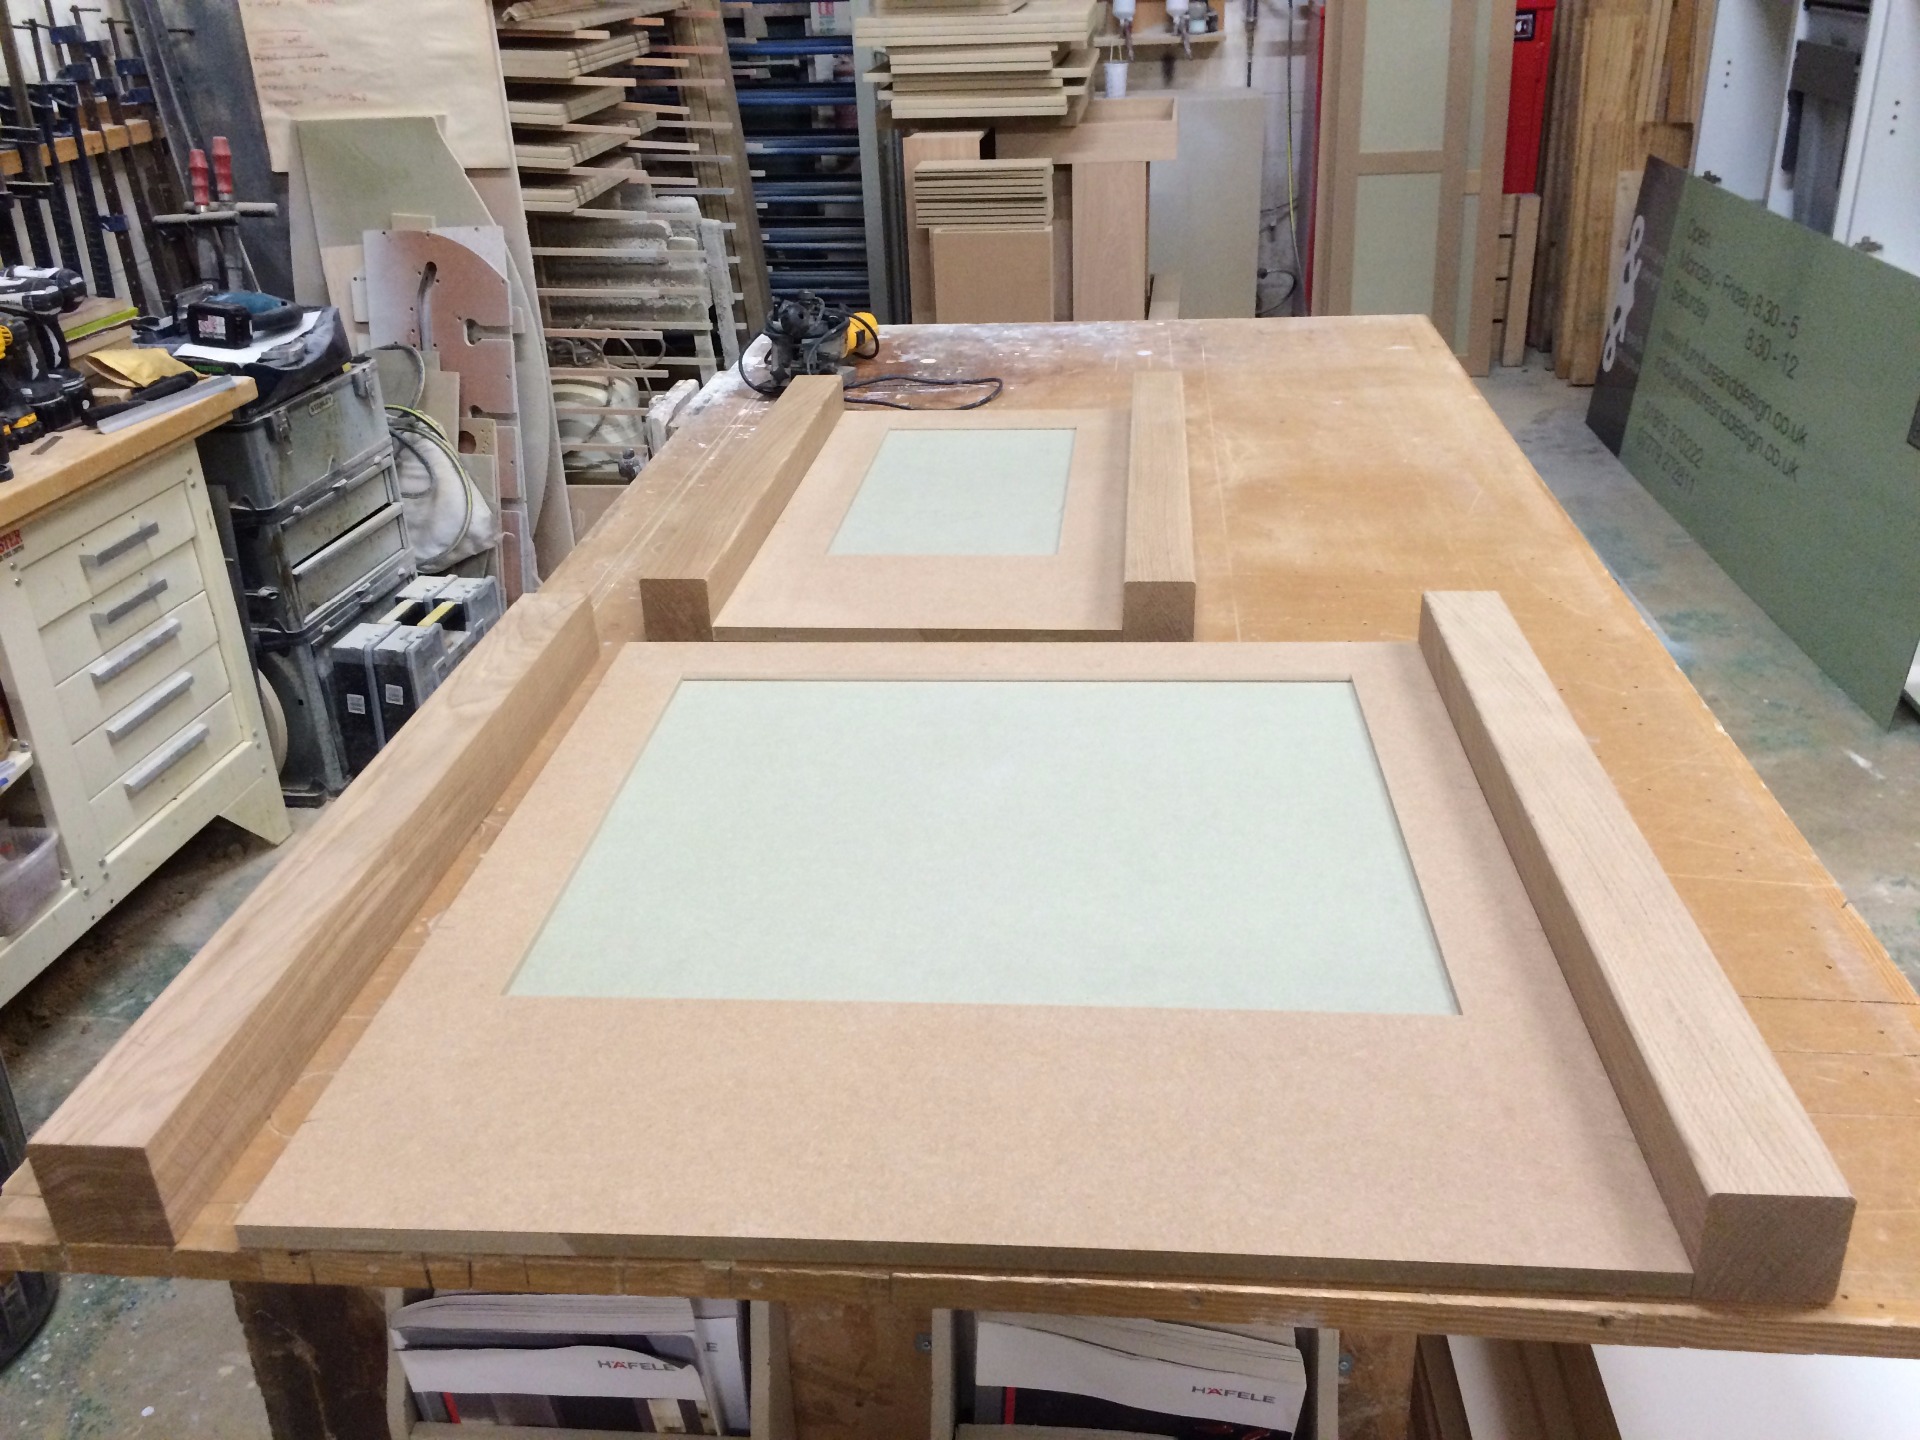 Doors being manufactured in Kidlington workshop, Oxfordshire